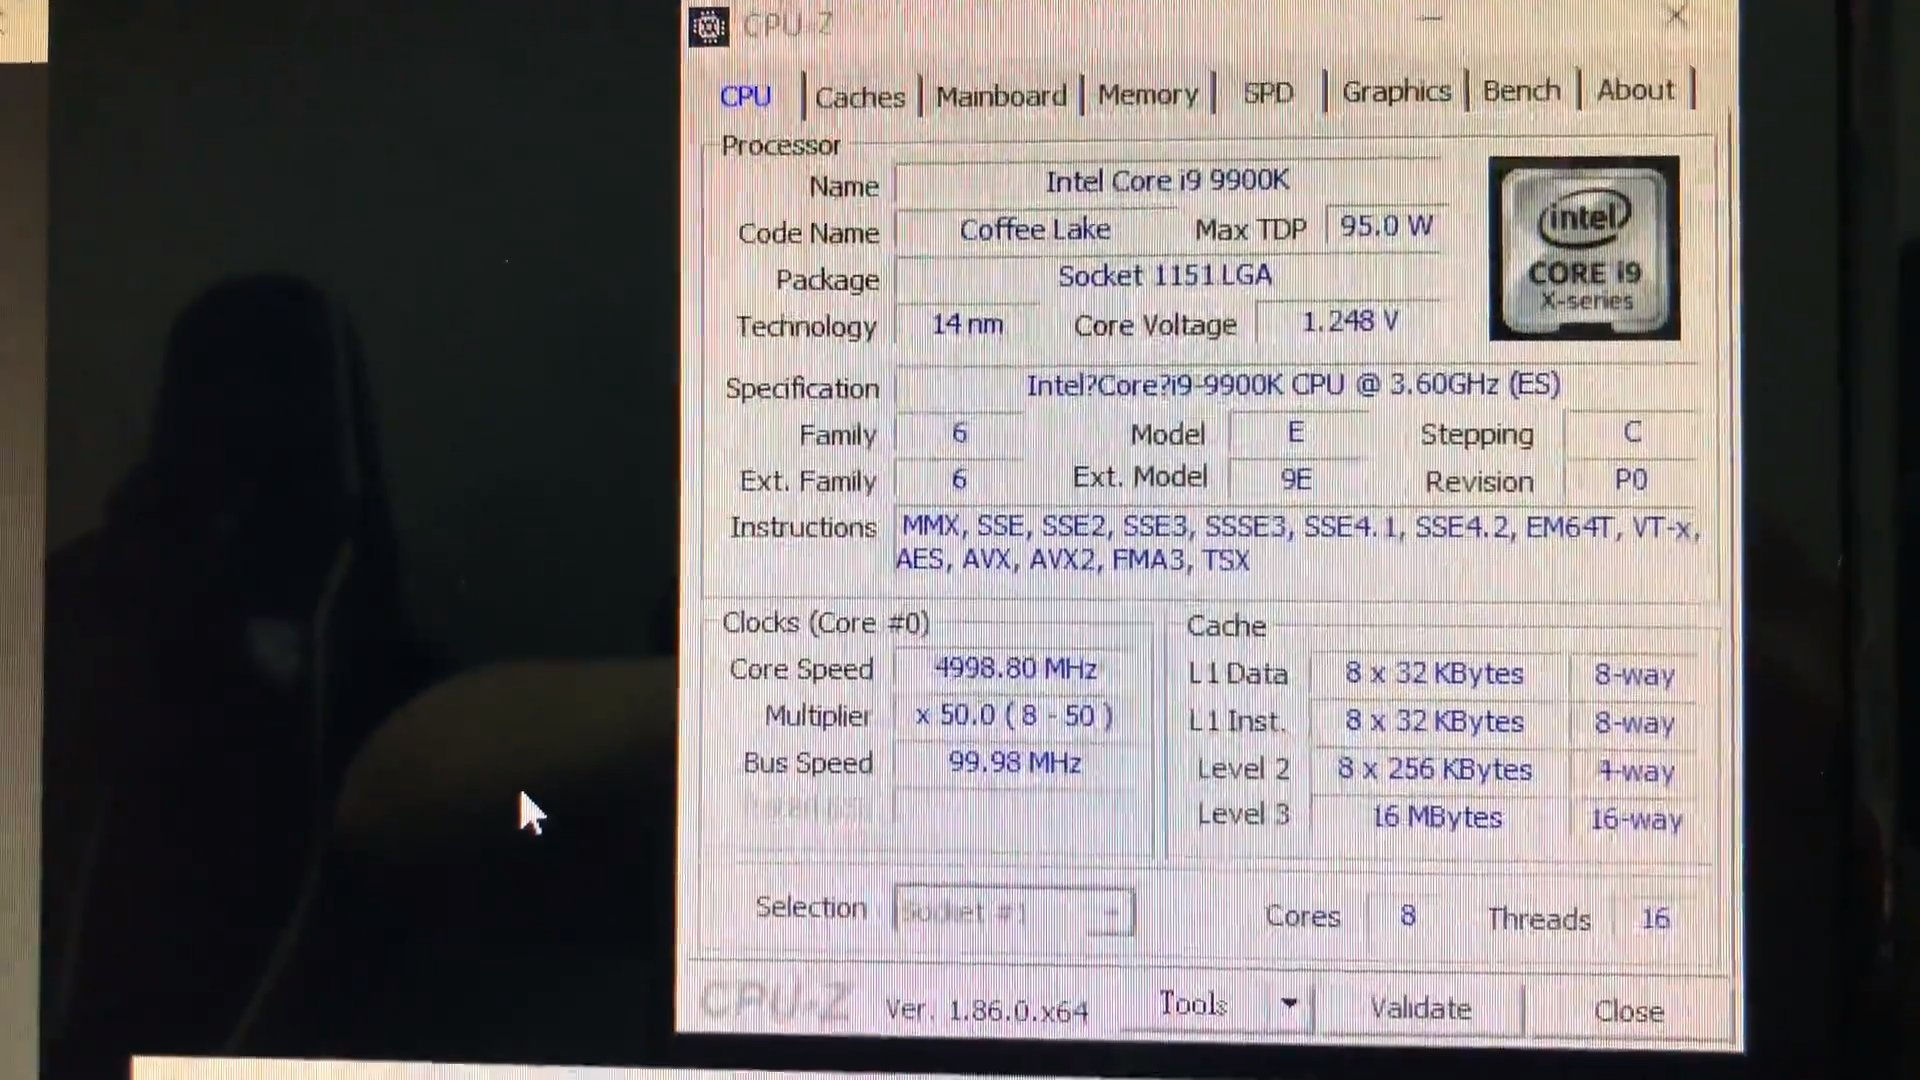 core i9 9900k cinebench cpuz 1 หลุดผลทดสอบ Intel Core i9 9900K ในโปรแกรม Cinebench 15 อย่างไม่เป็นทางการ ทำคะแนนเรนเดอร์อยู่ที่ 2166คะแนน 